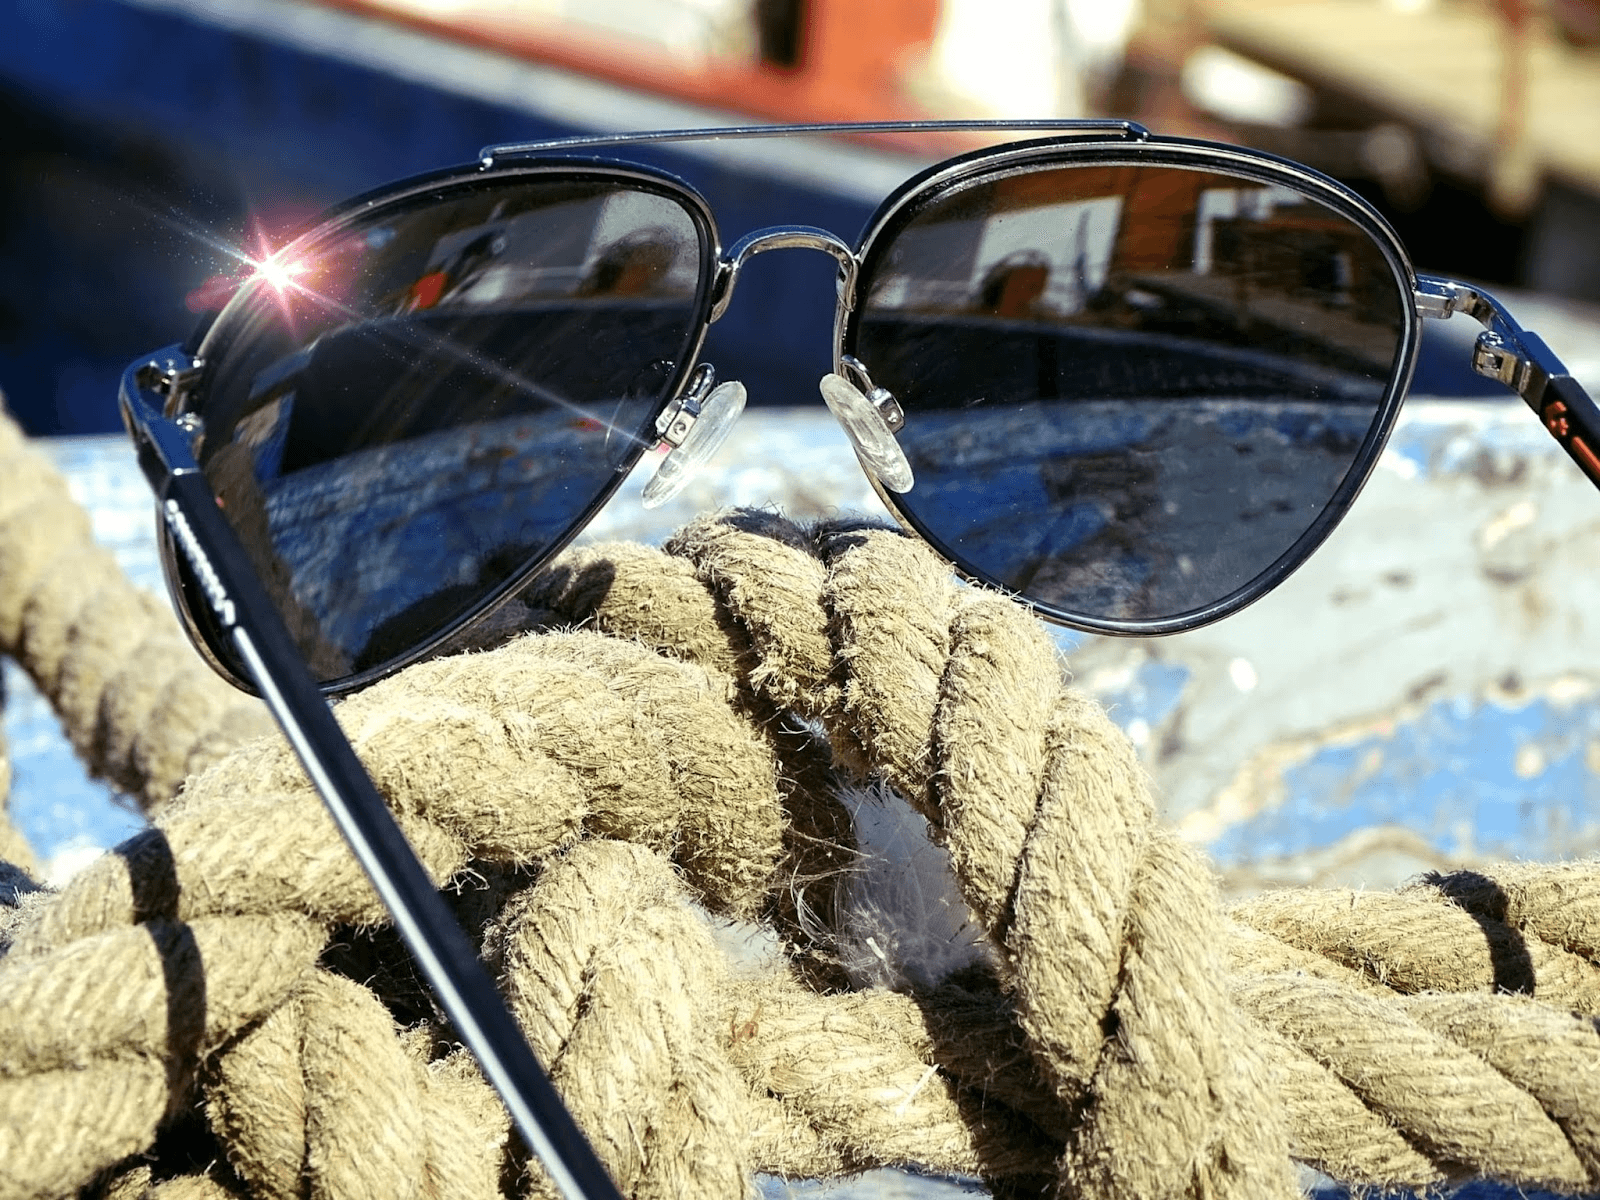 A glare appeared on sunglasses